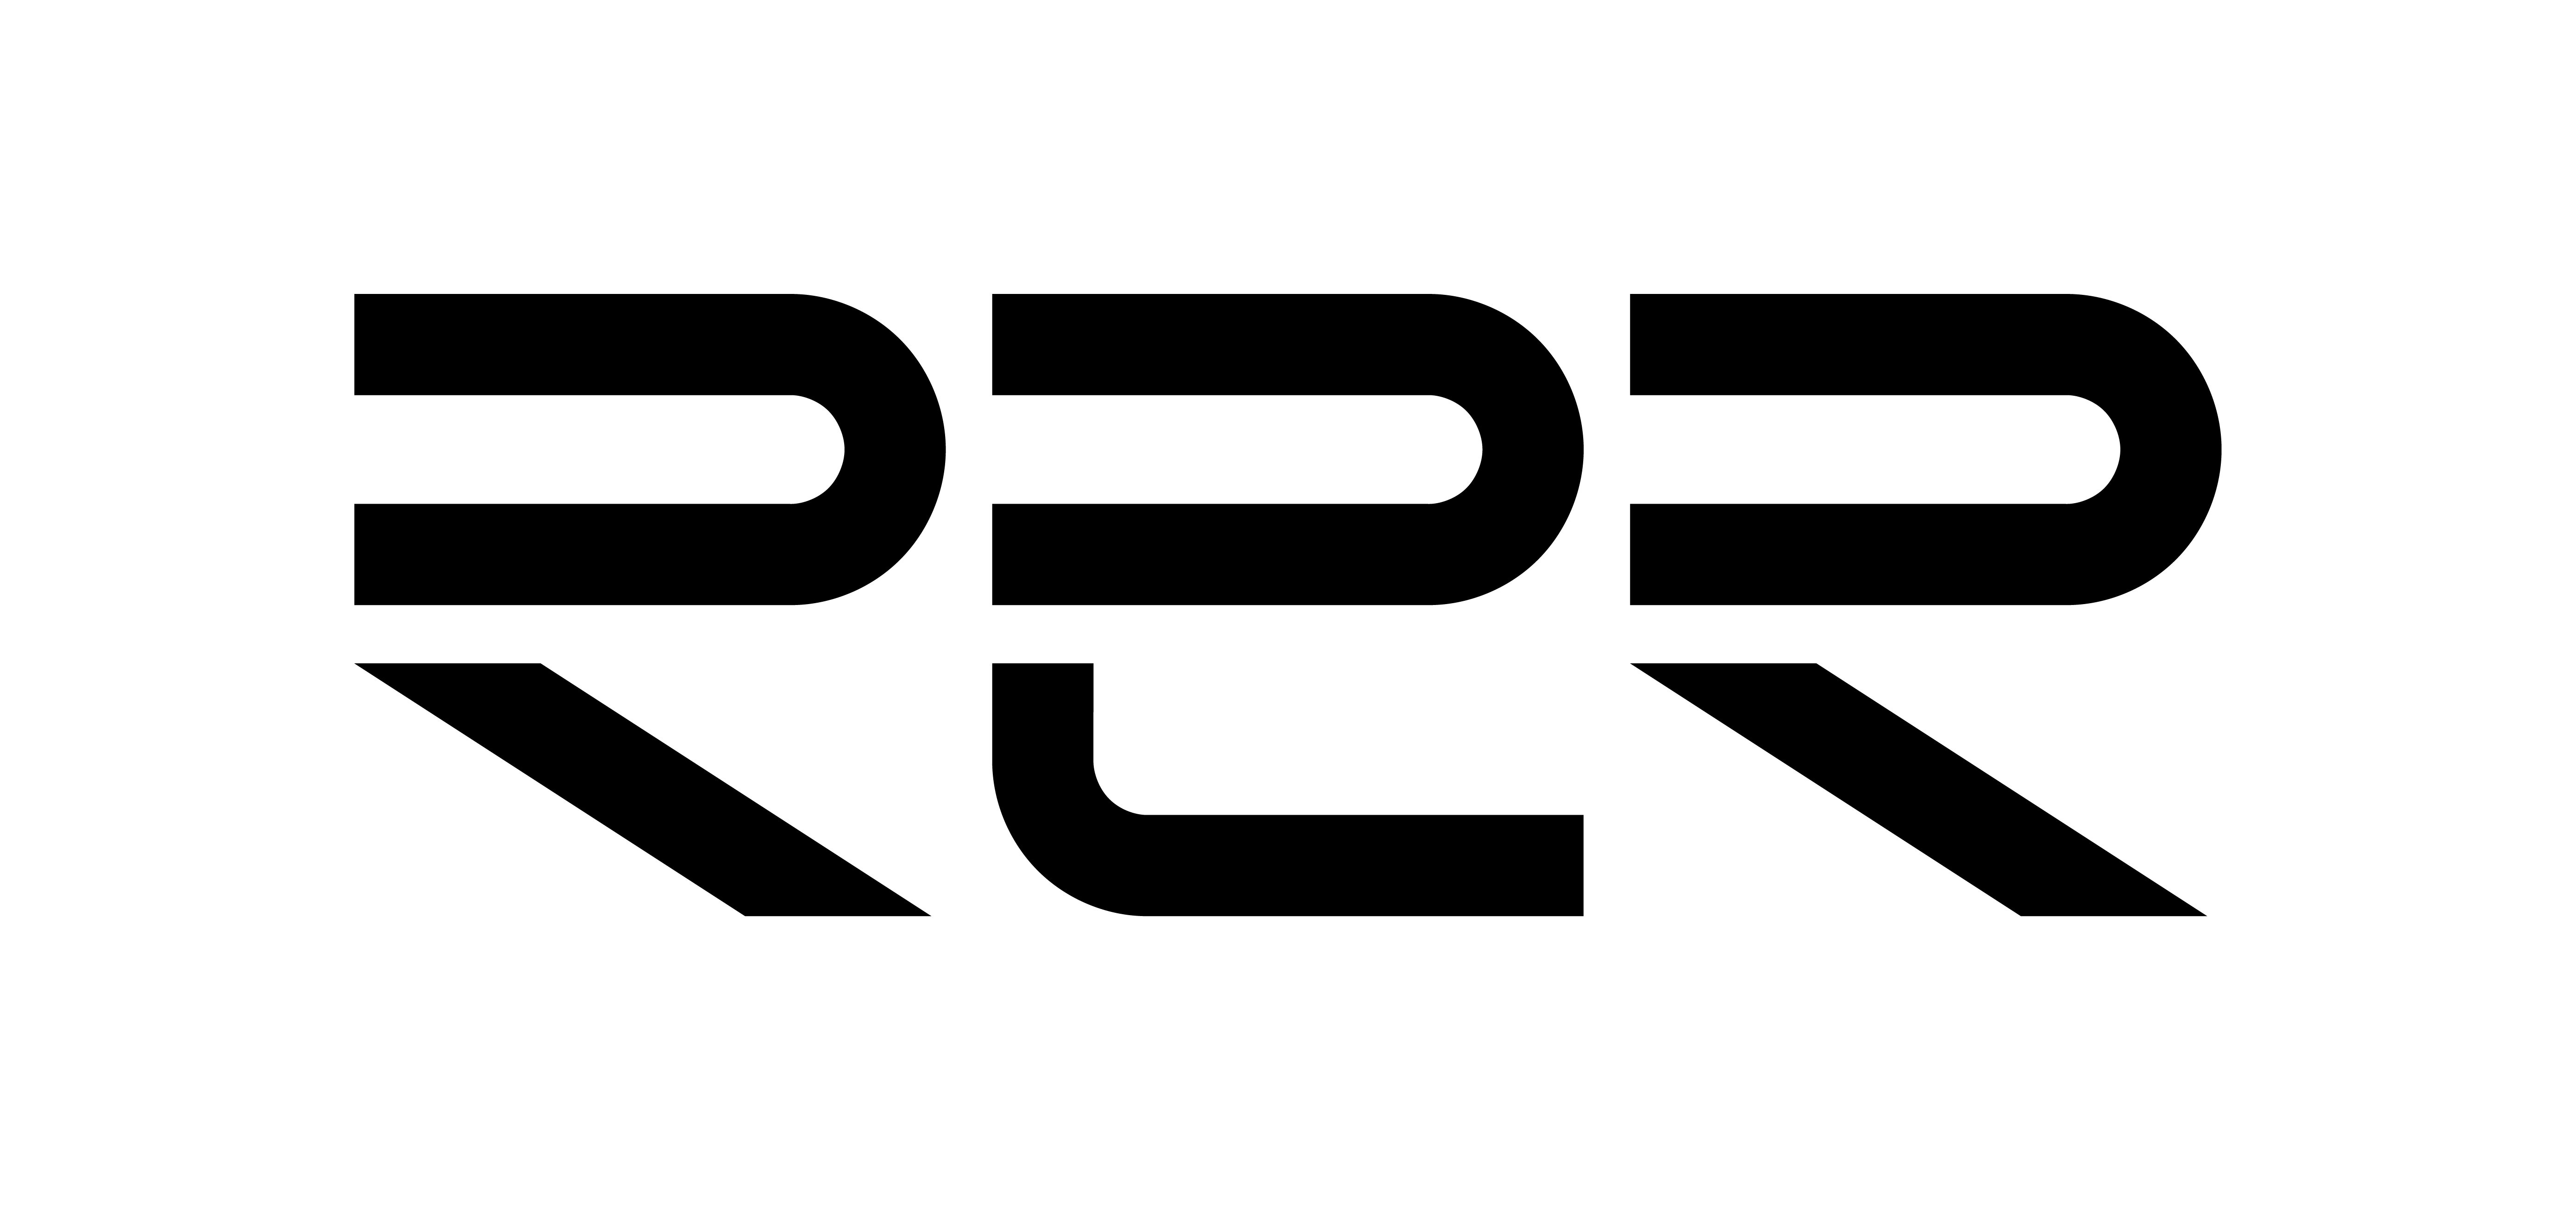 Trademark Logo R2R